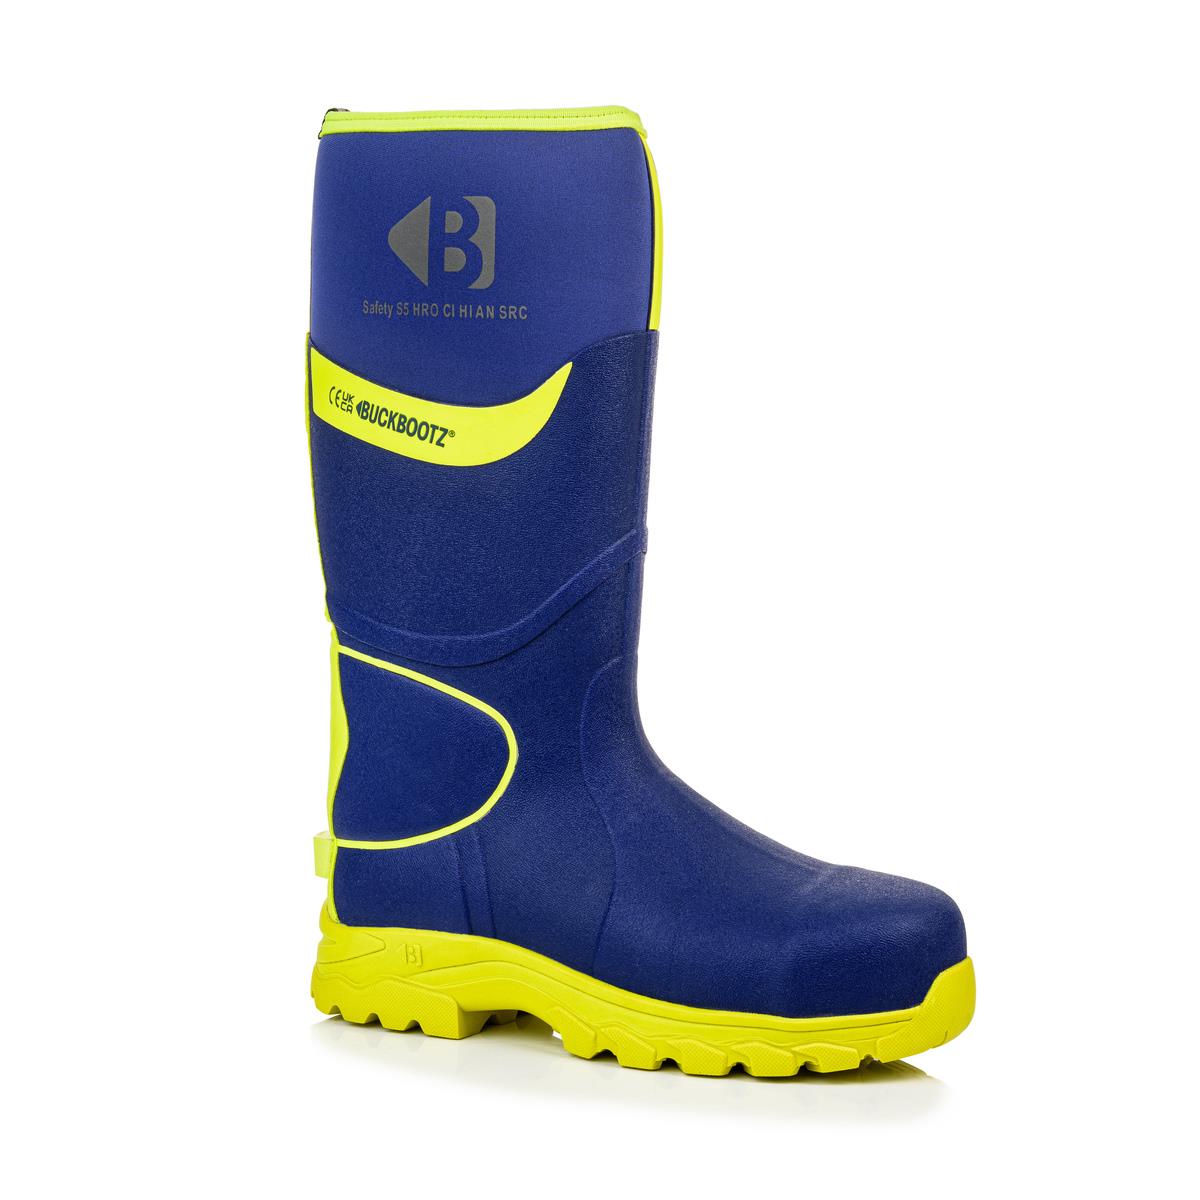 Buckbootz S5 blue/yellow composite toe/midsole safety wellington boot #BBZ8000